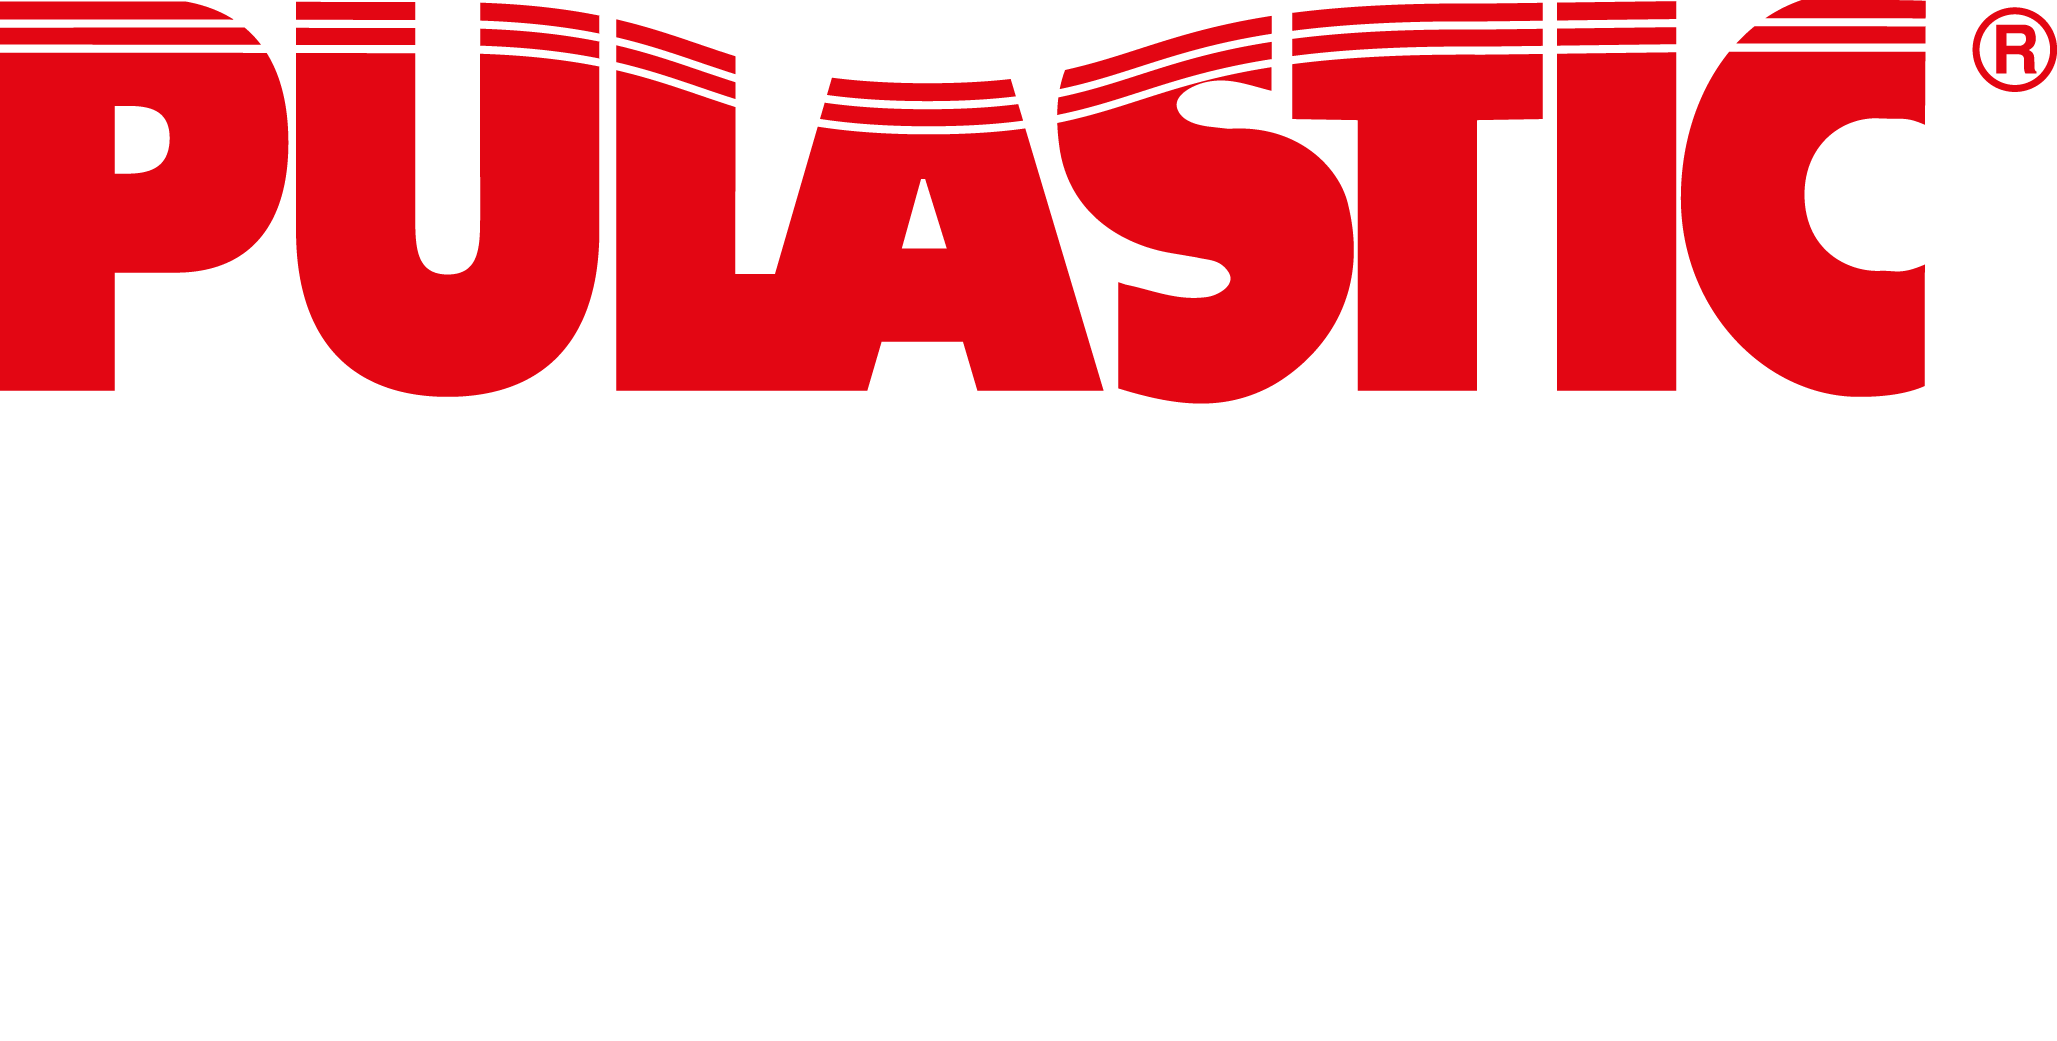 Pulastic sports flooring